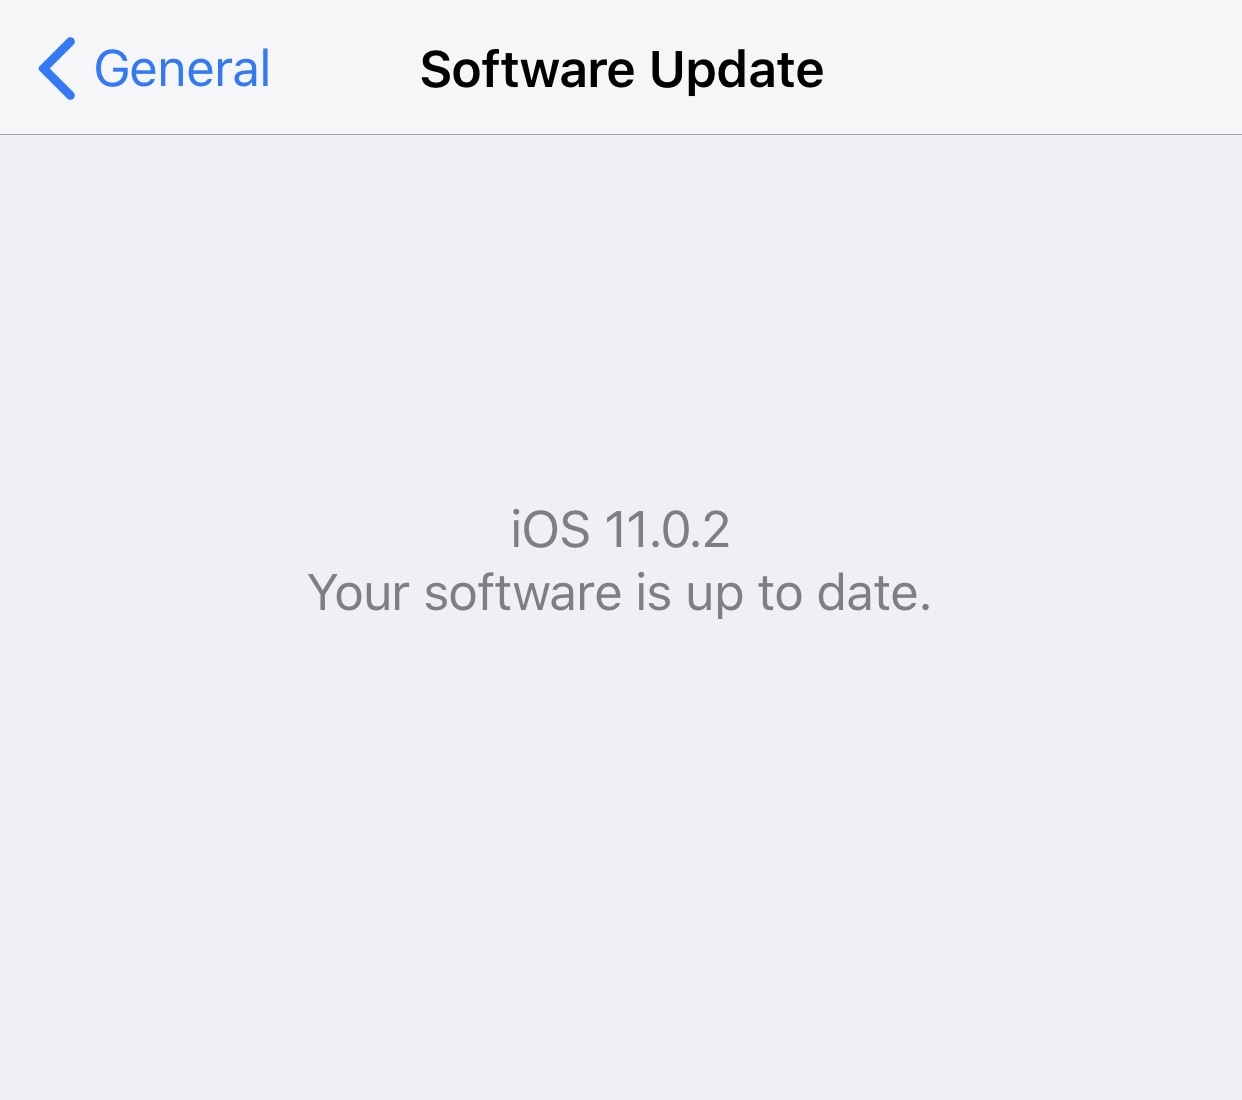 Mac content caching - a screenshot showing the iOS software update screen